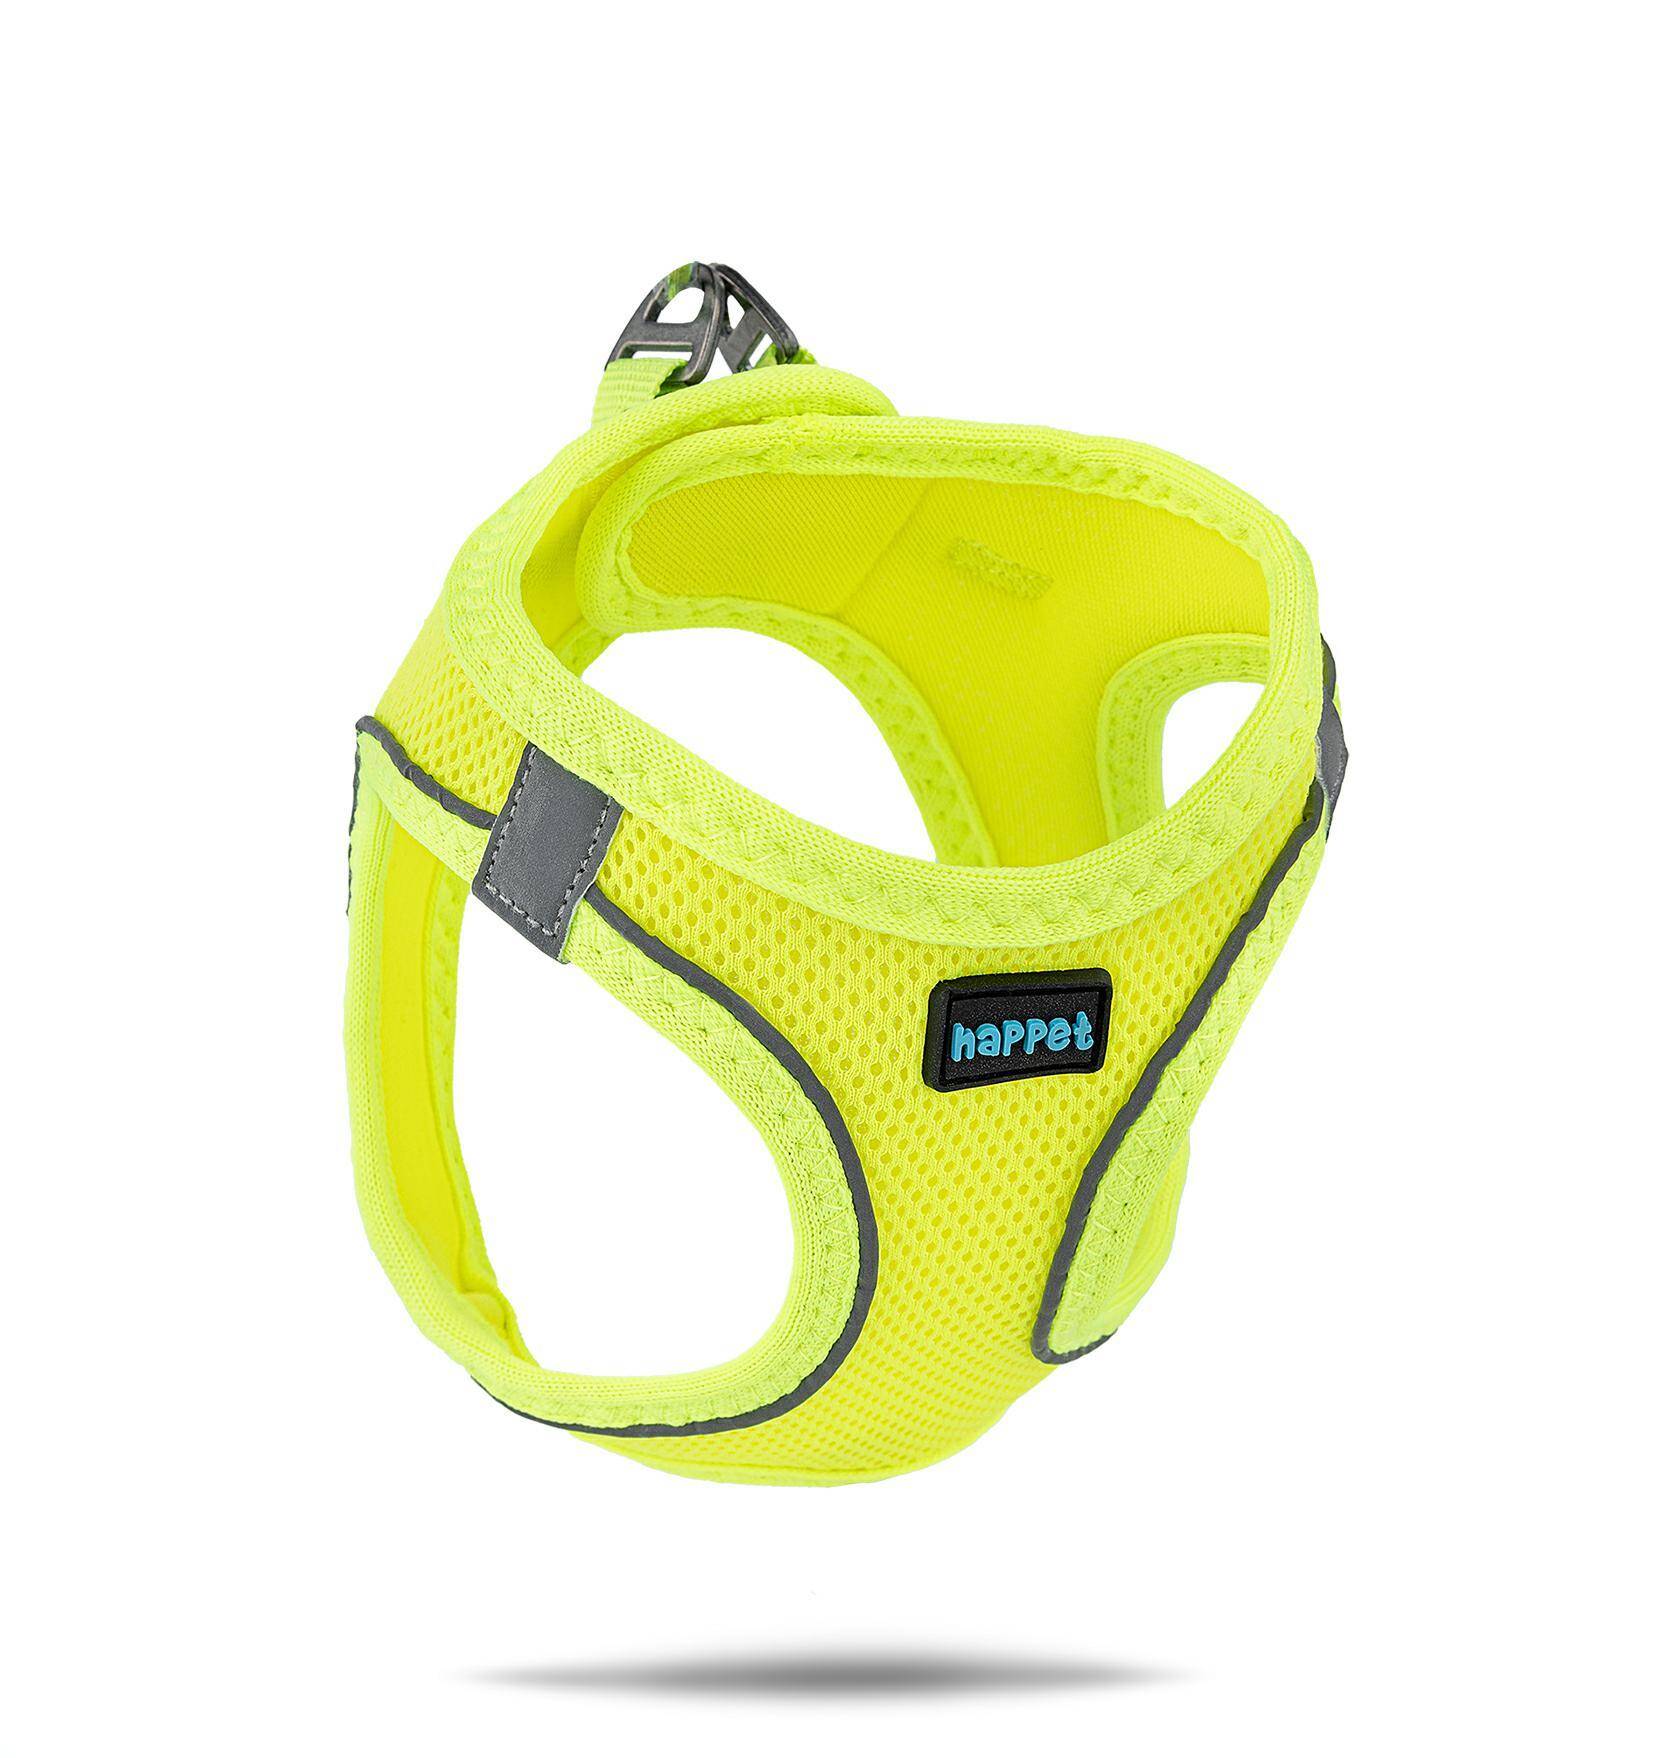 Geschirr Air Comfort M Neon-Limette